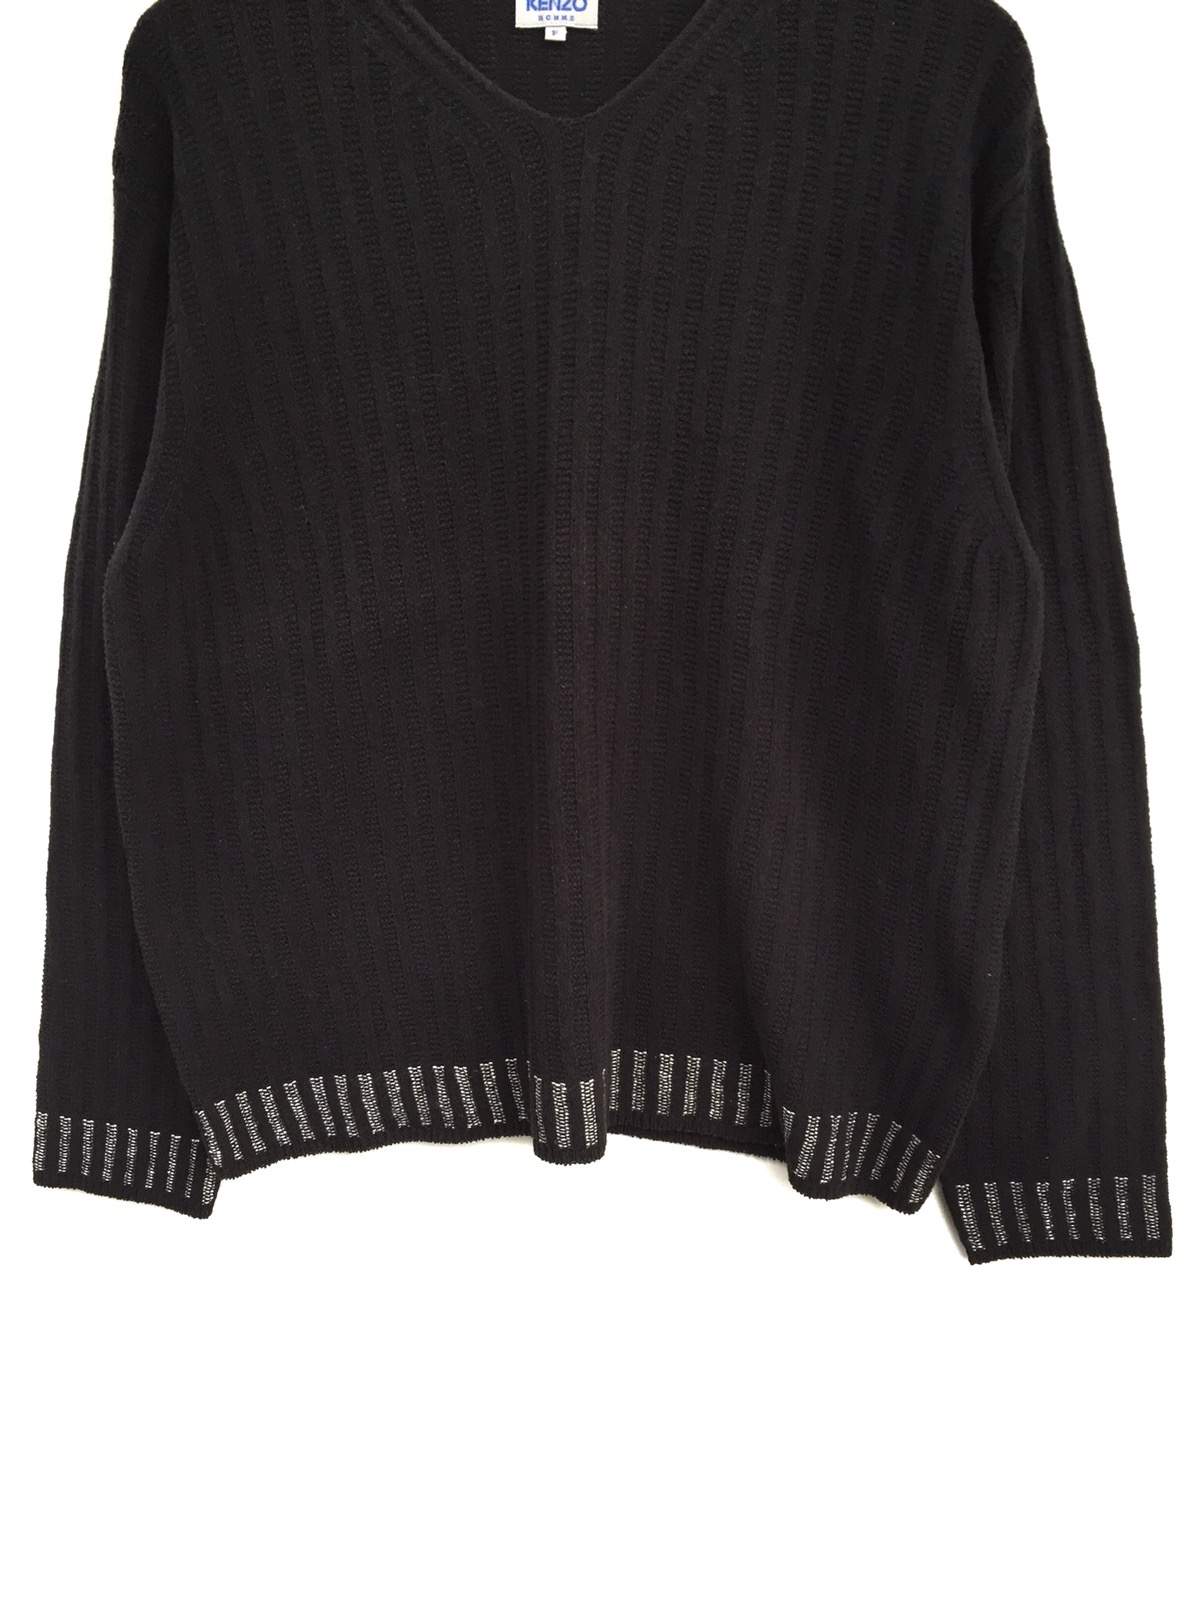 Vintage Japanese Brand Kenzo Hand Knit Black Sweatshirt - 4